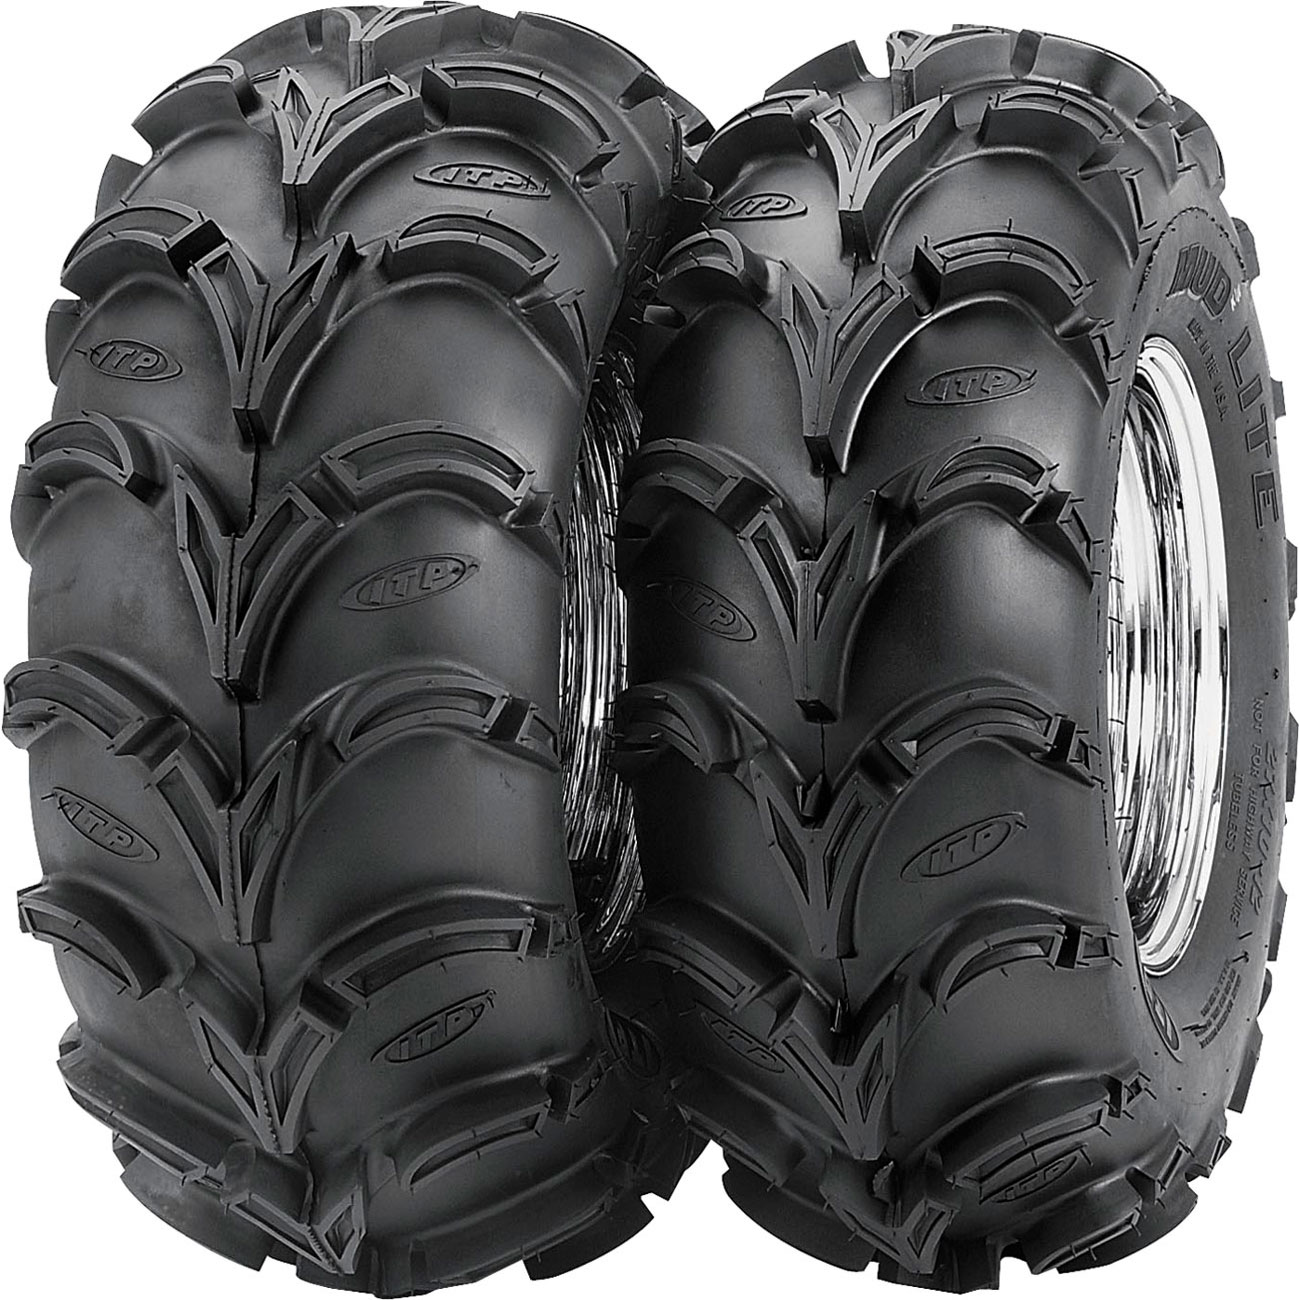 2 Pair of ITP Mud Lite XL ATV Tires 27x10-12 6ply 